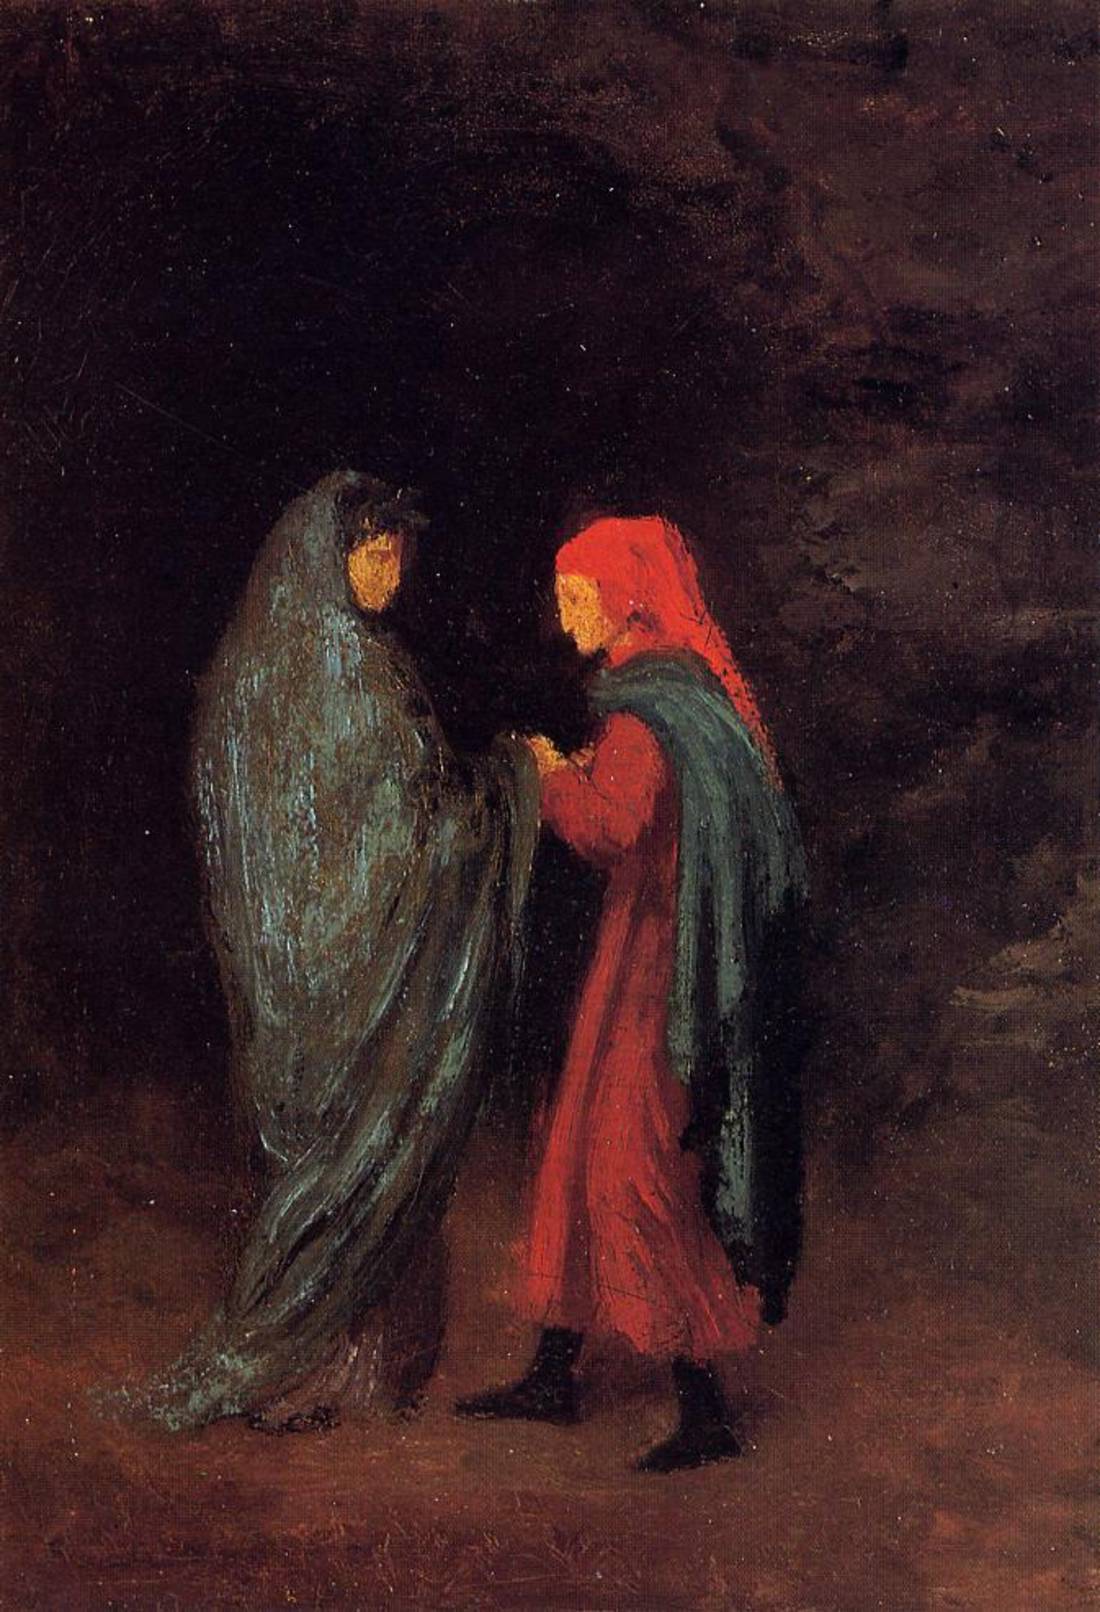 Degas' Dante and Virgil